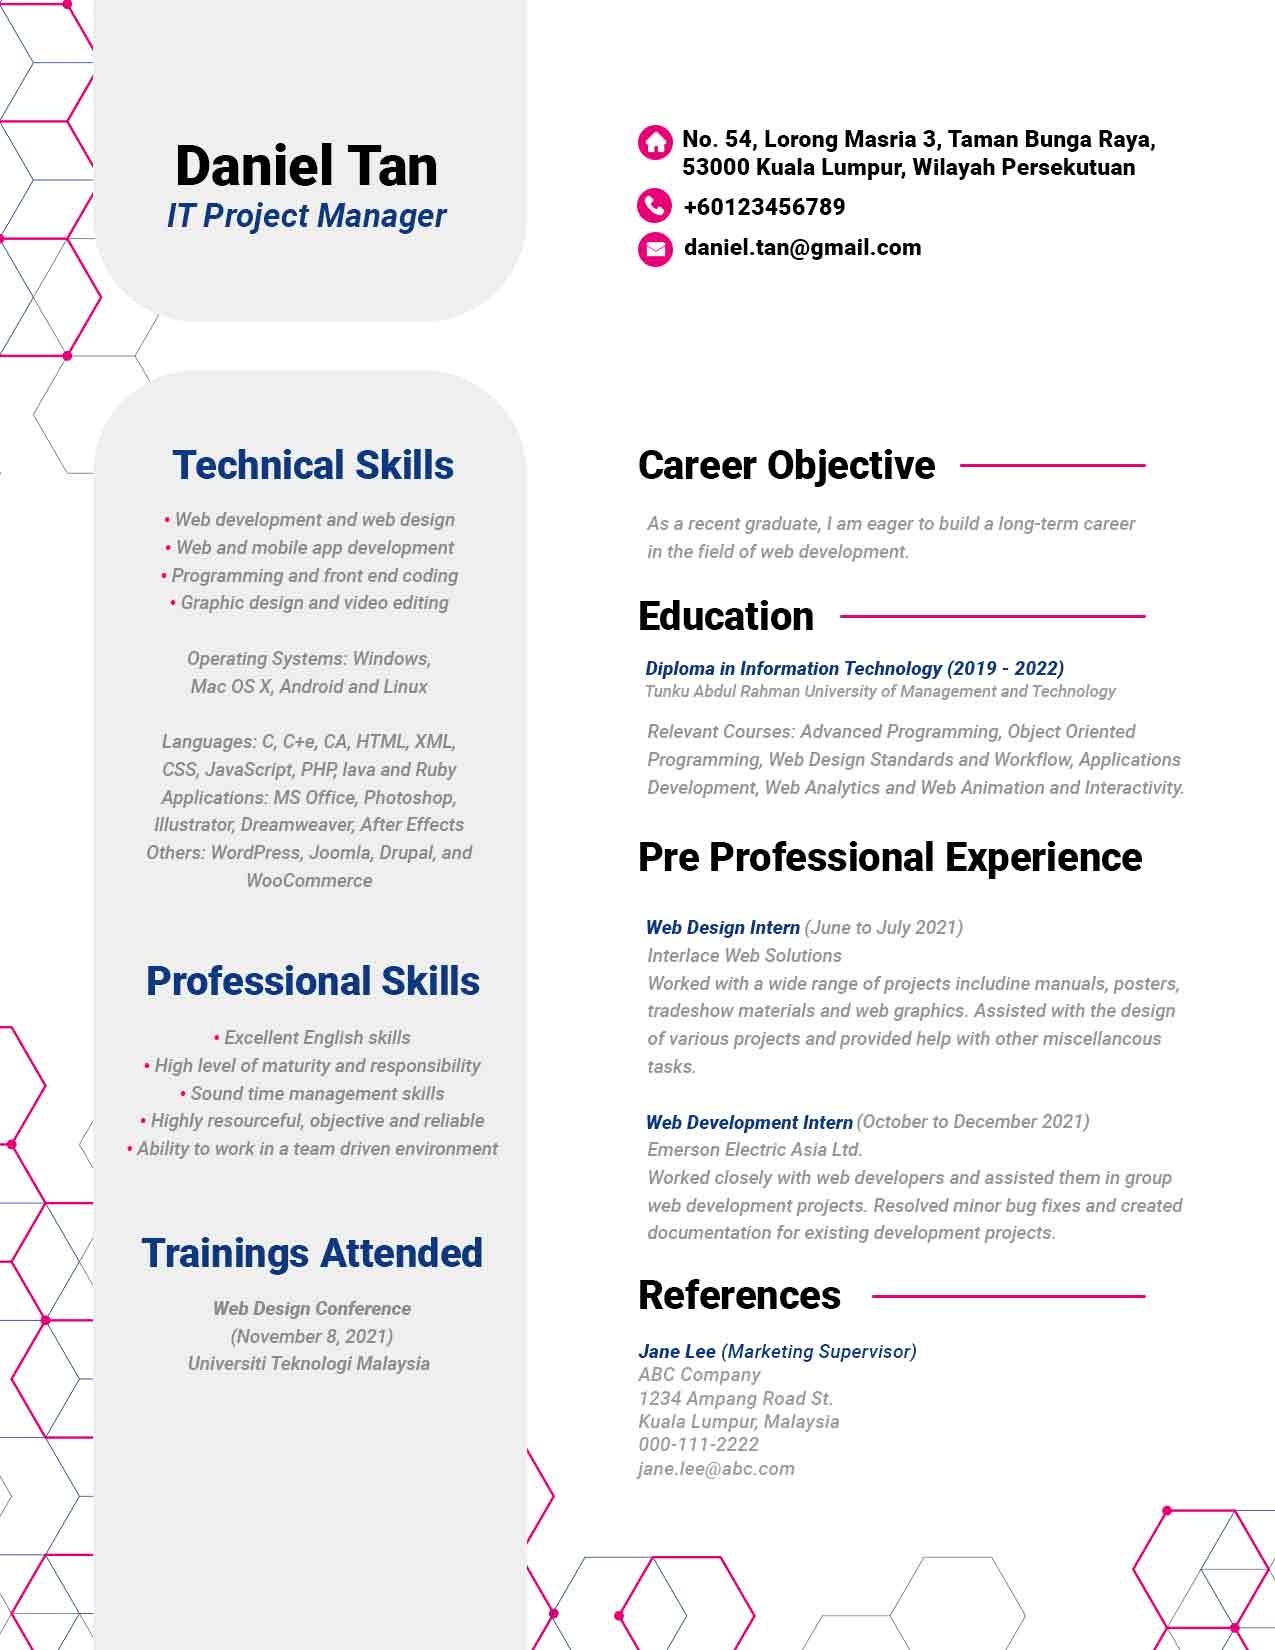 Resume career objective sample